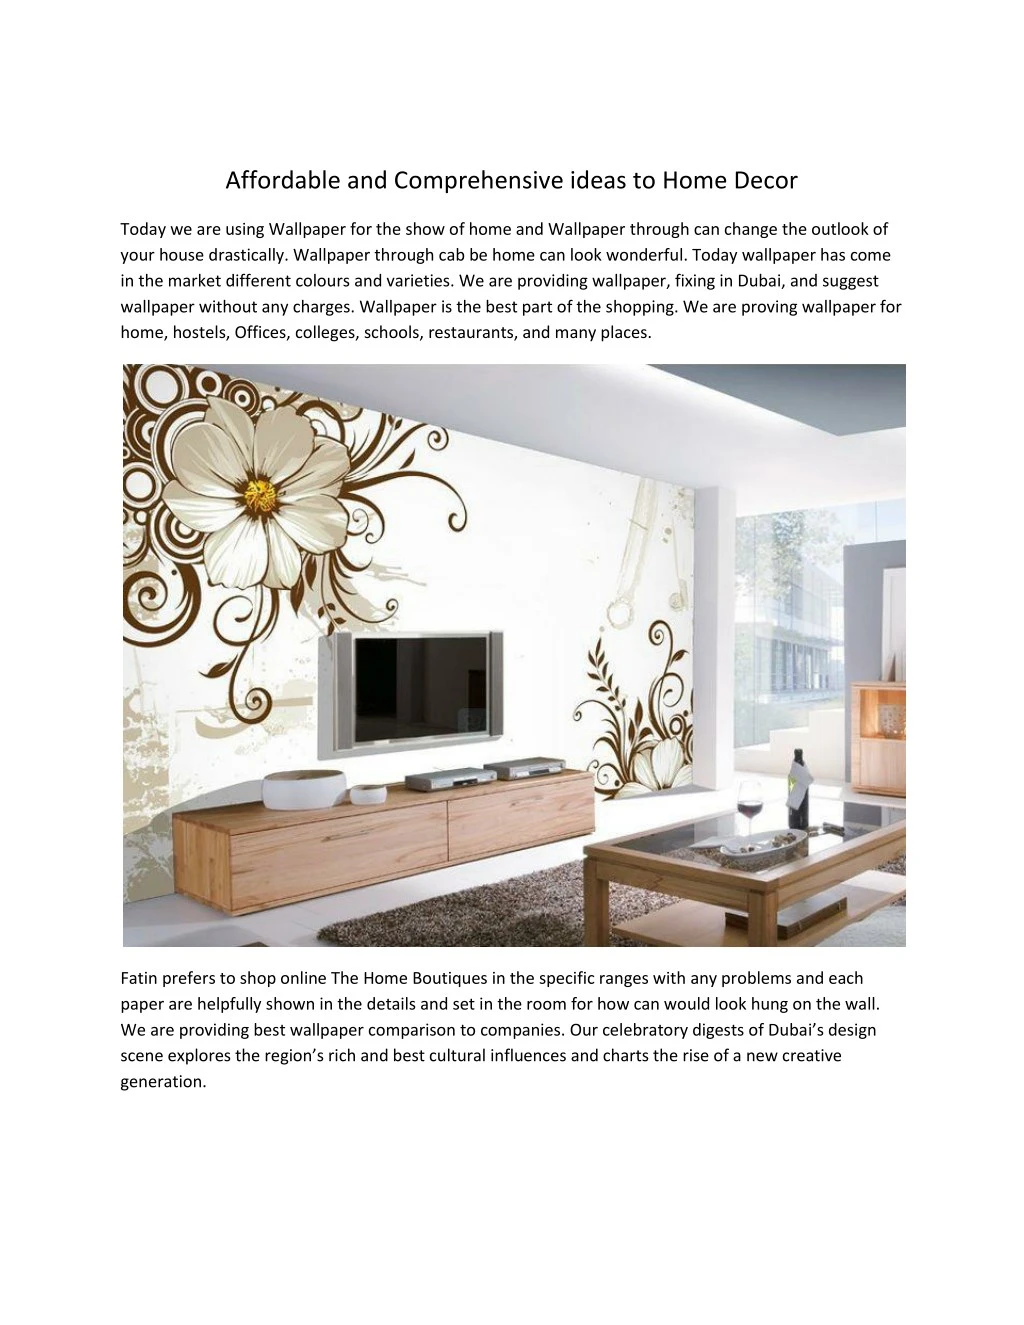 https://cdn4.slideserve.com/7760547/affordable-and-comprehensive-ideas-to-home-decor-n.jpg